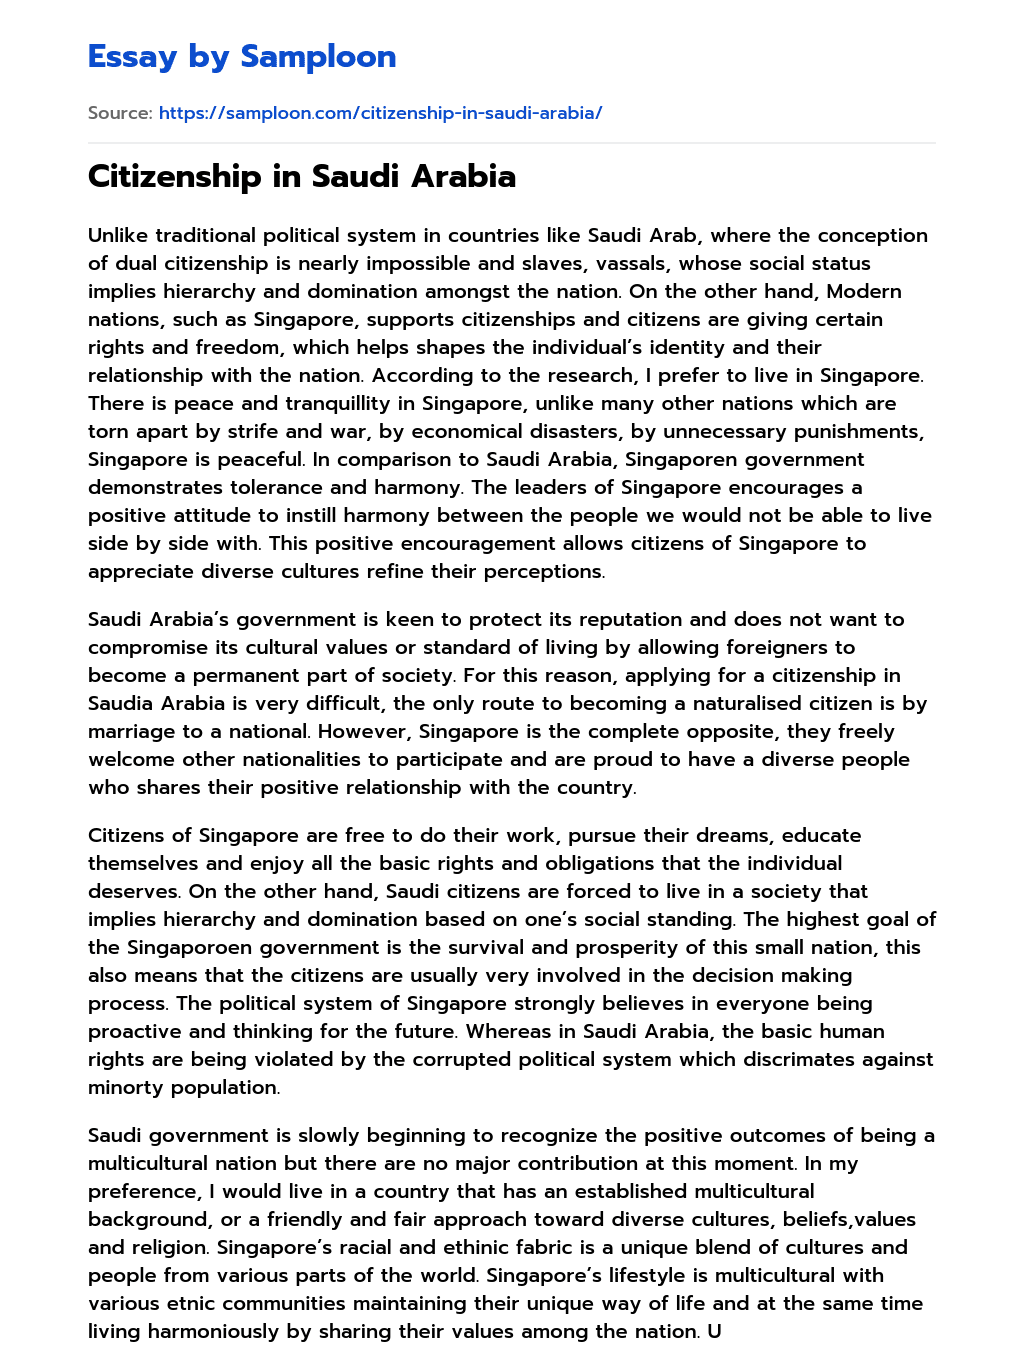 Citizenship in Saudi Arabia essay